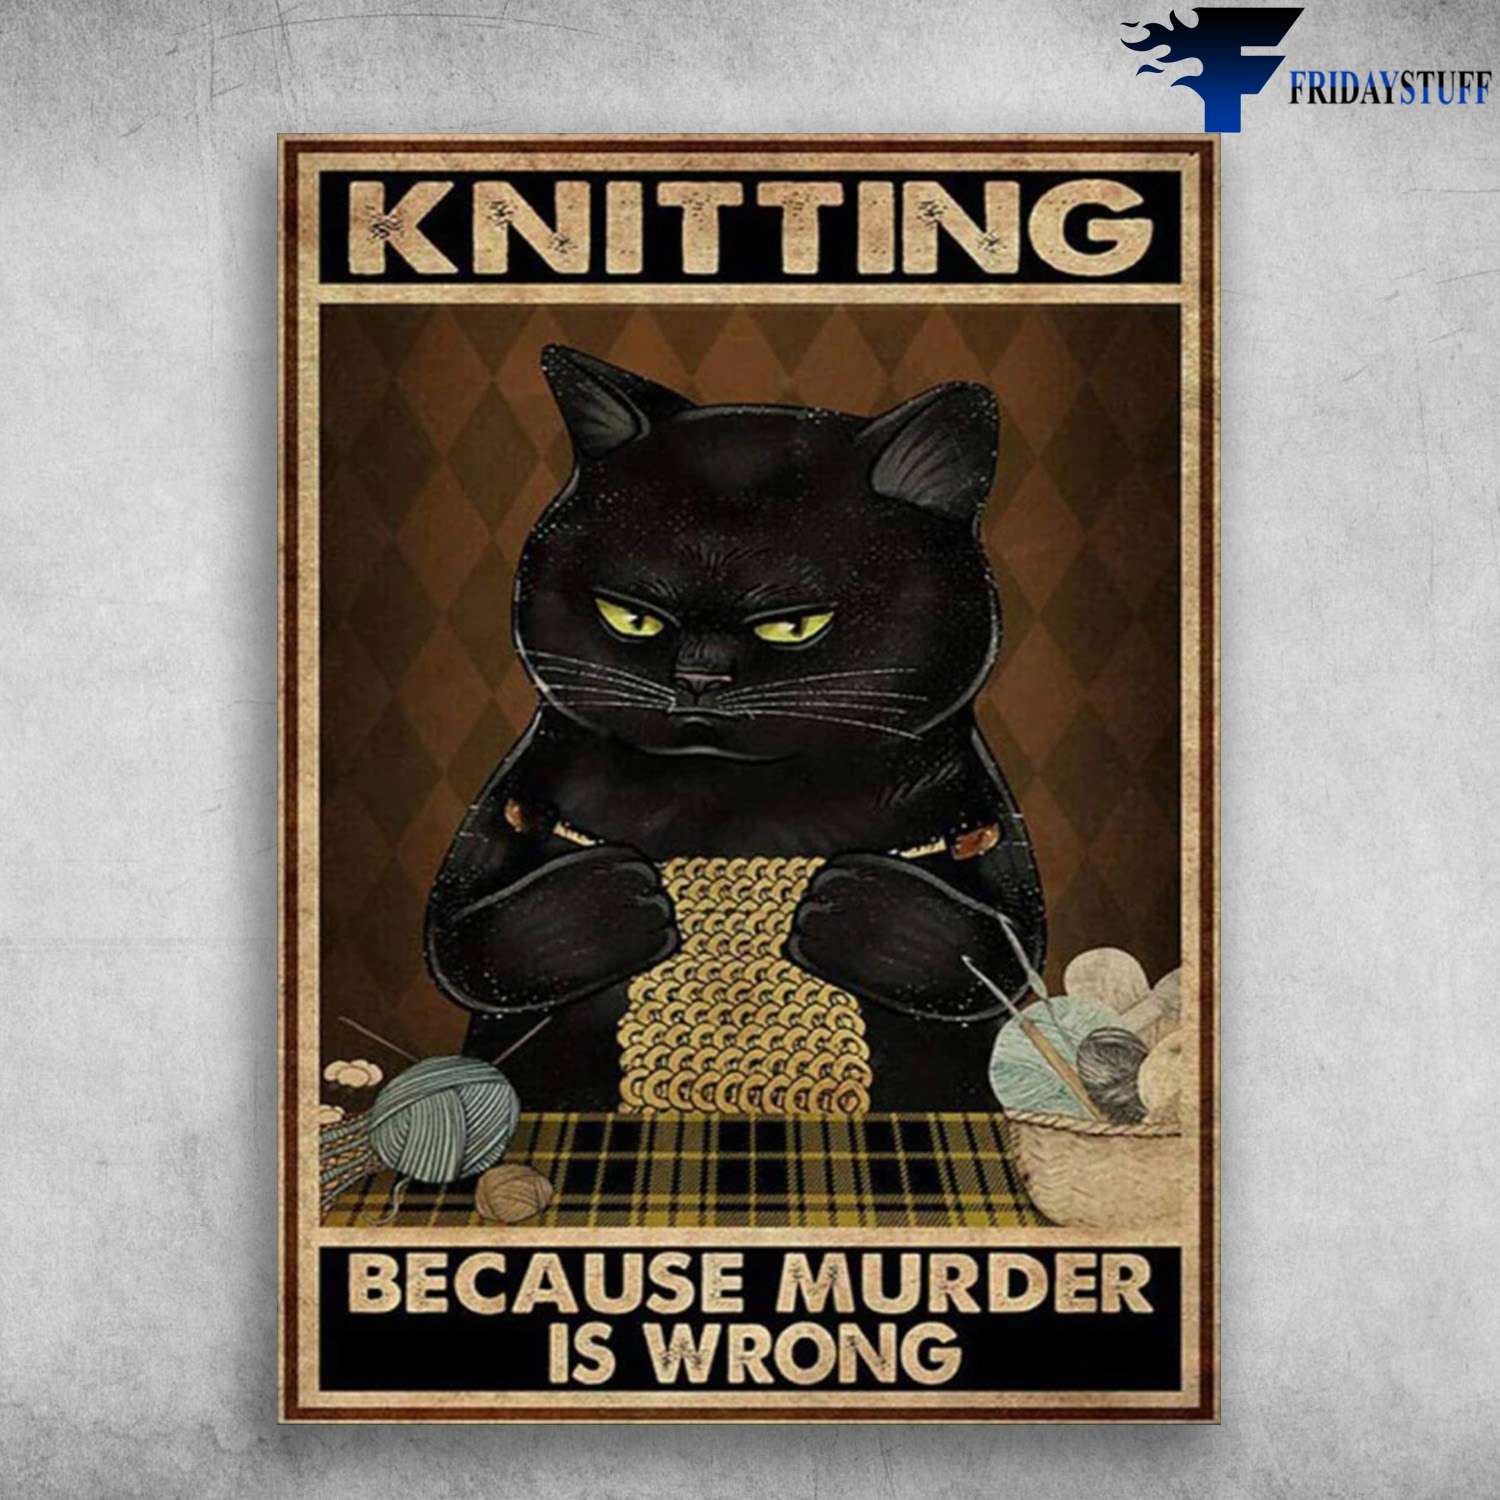 Knitting Black Cat - Knitting Because Murder Is Wrong